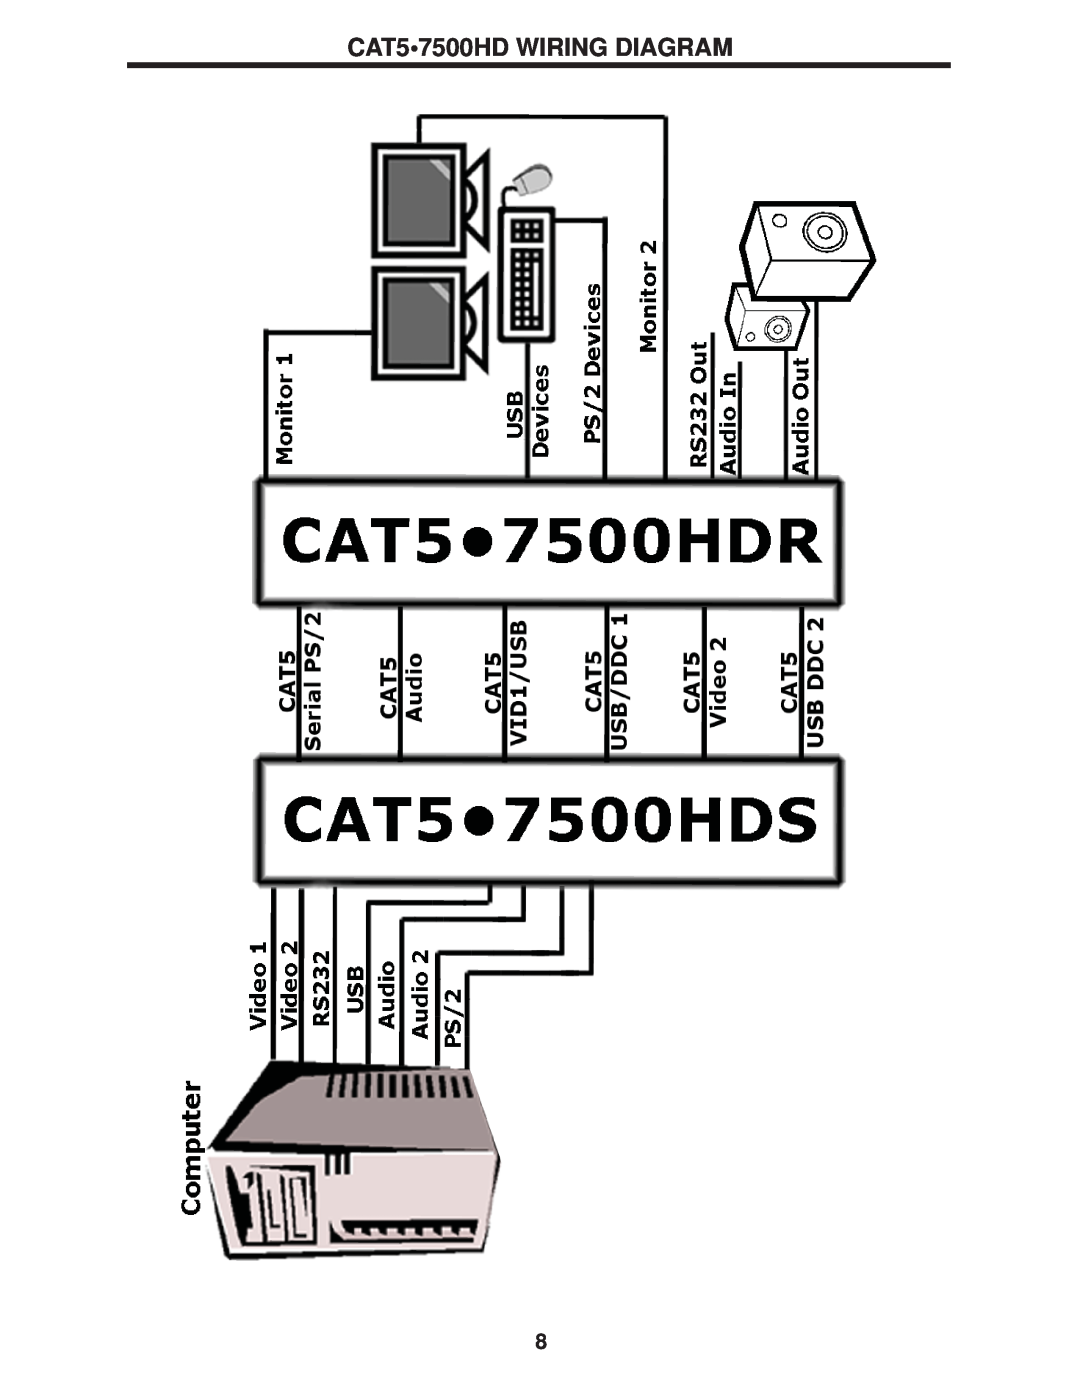 Gefen user manual CAT57500HD WIRING DIAGRAM 